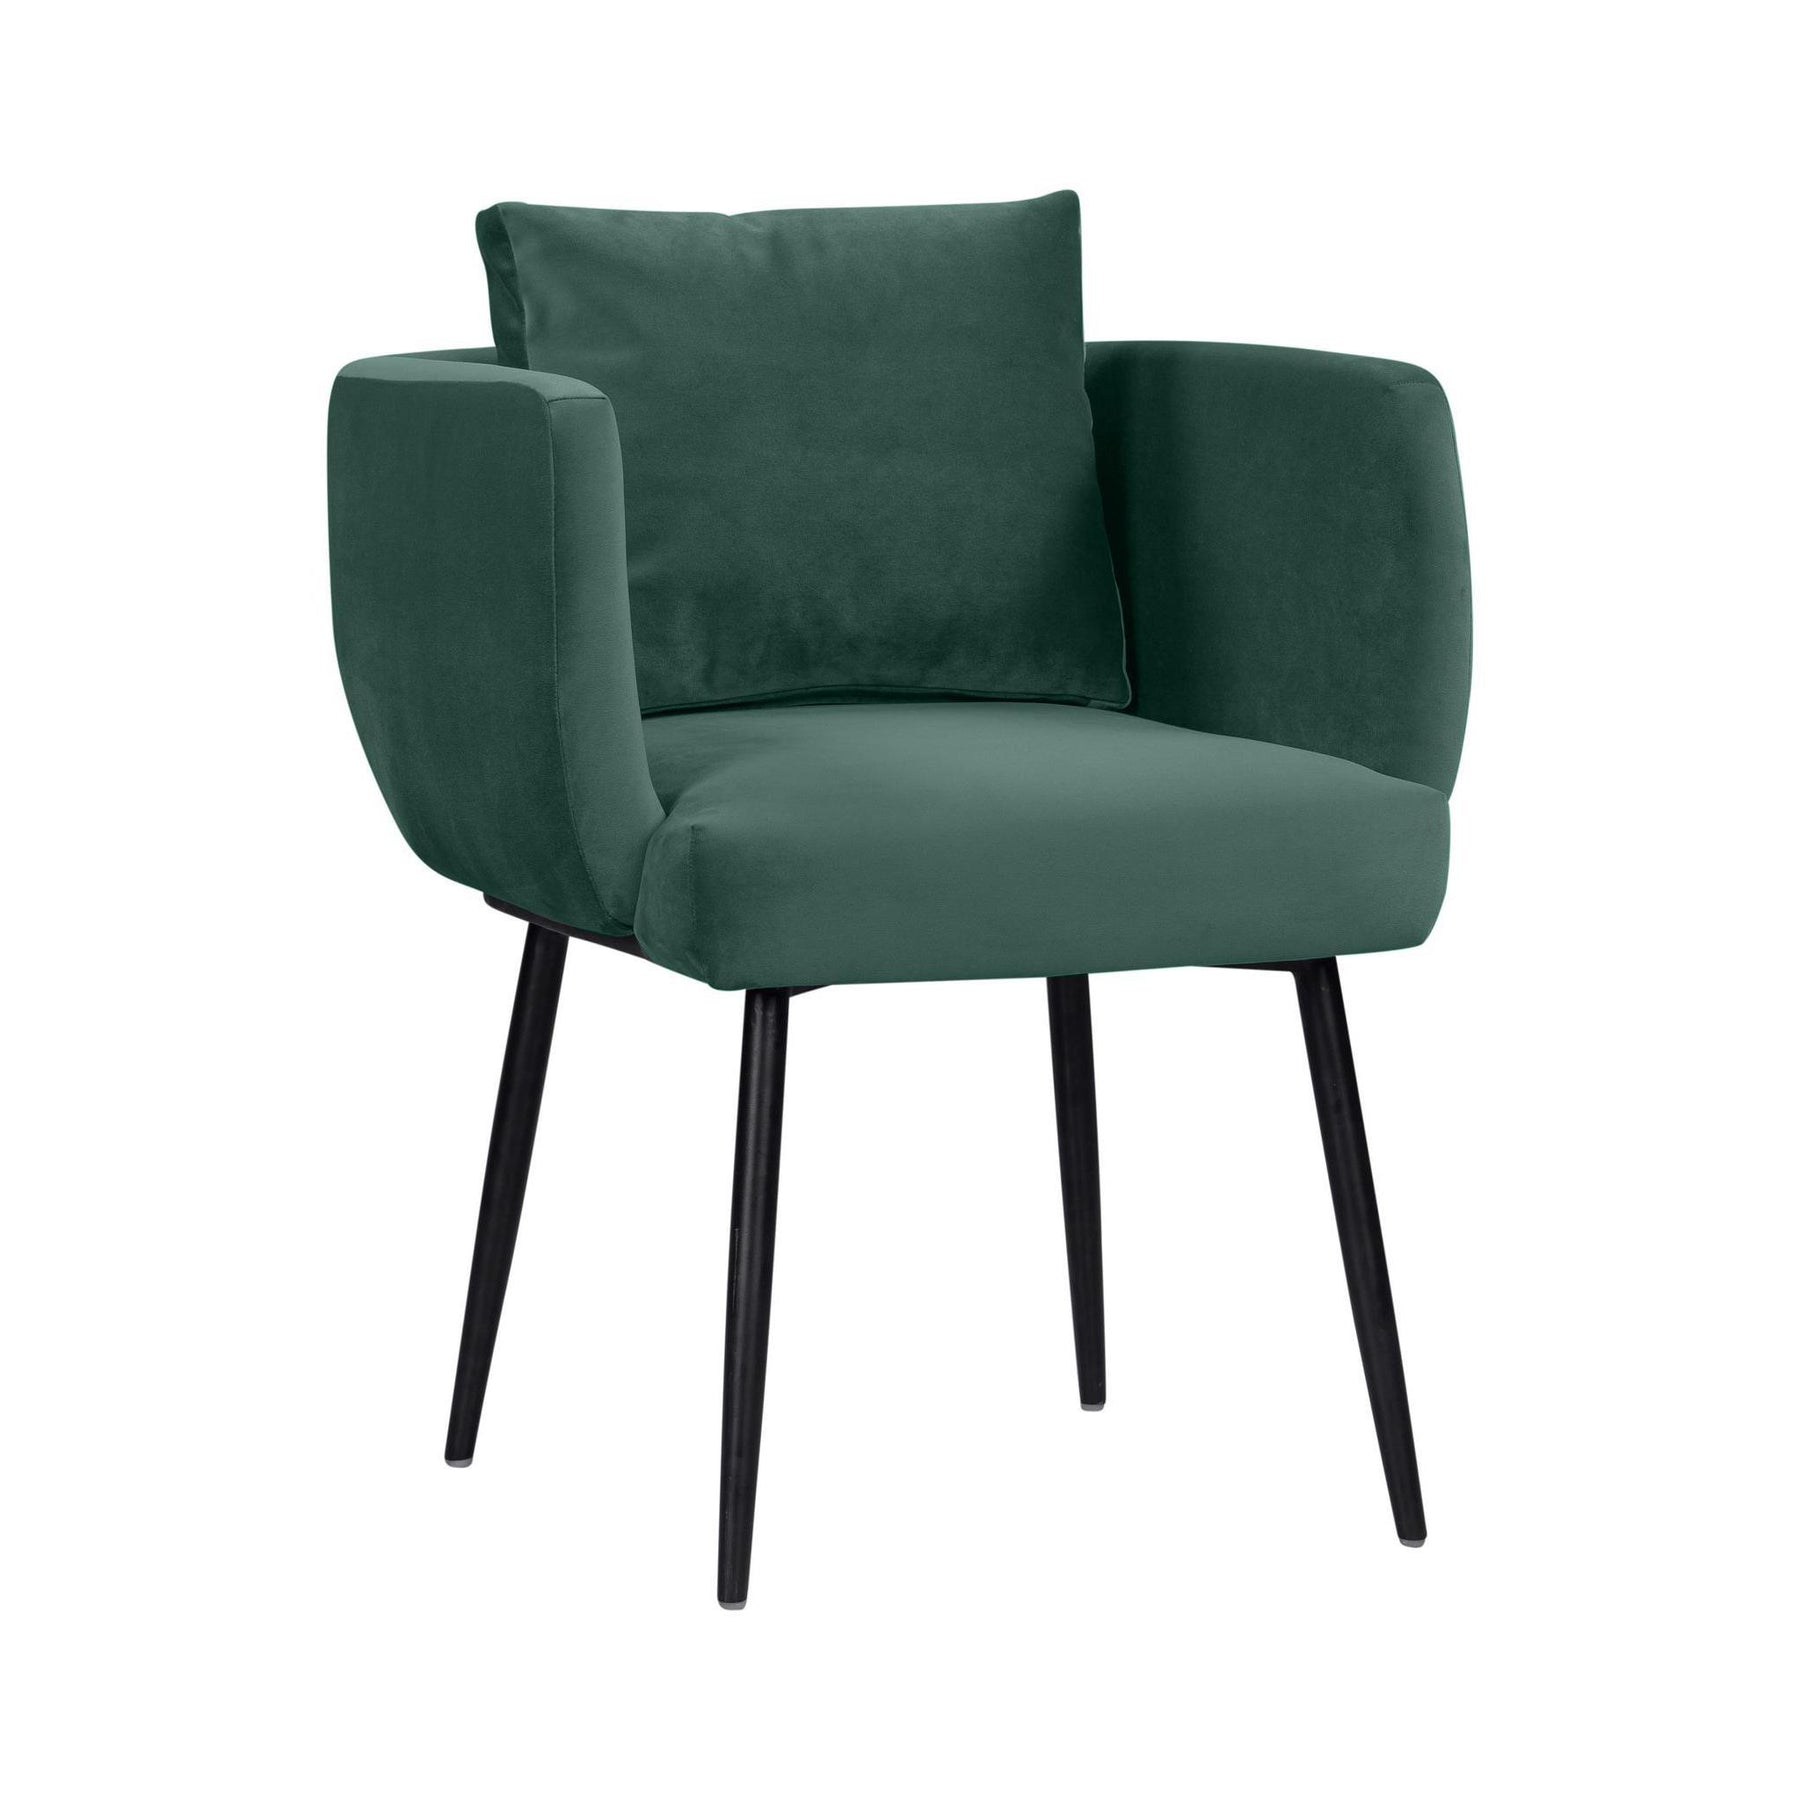 TOV Furniture Modern Alto Forest Green Velvet Chair - TOV Furniture, Minimal & Modern - 1